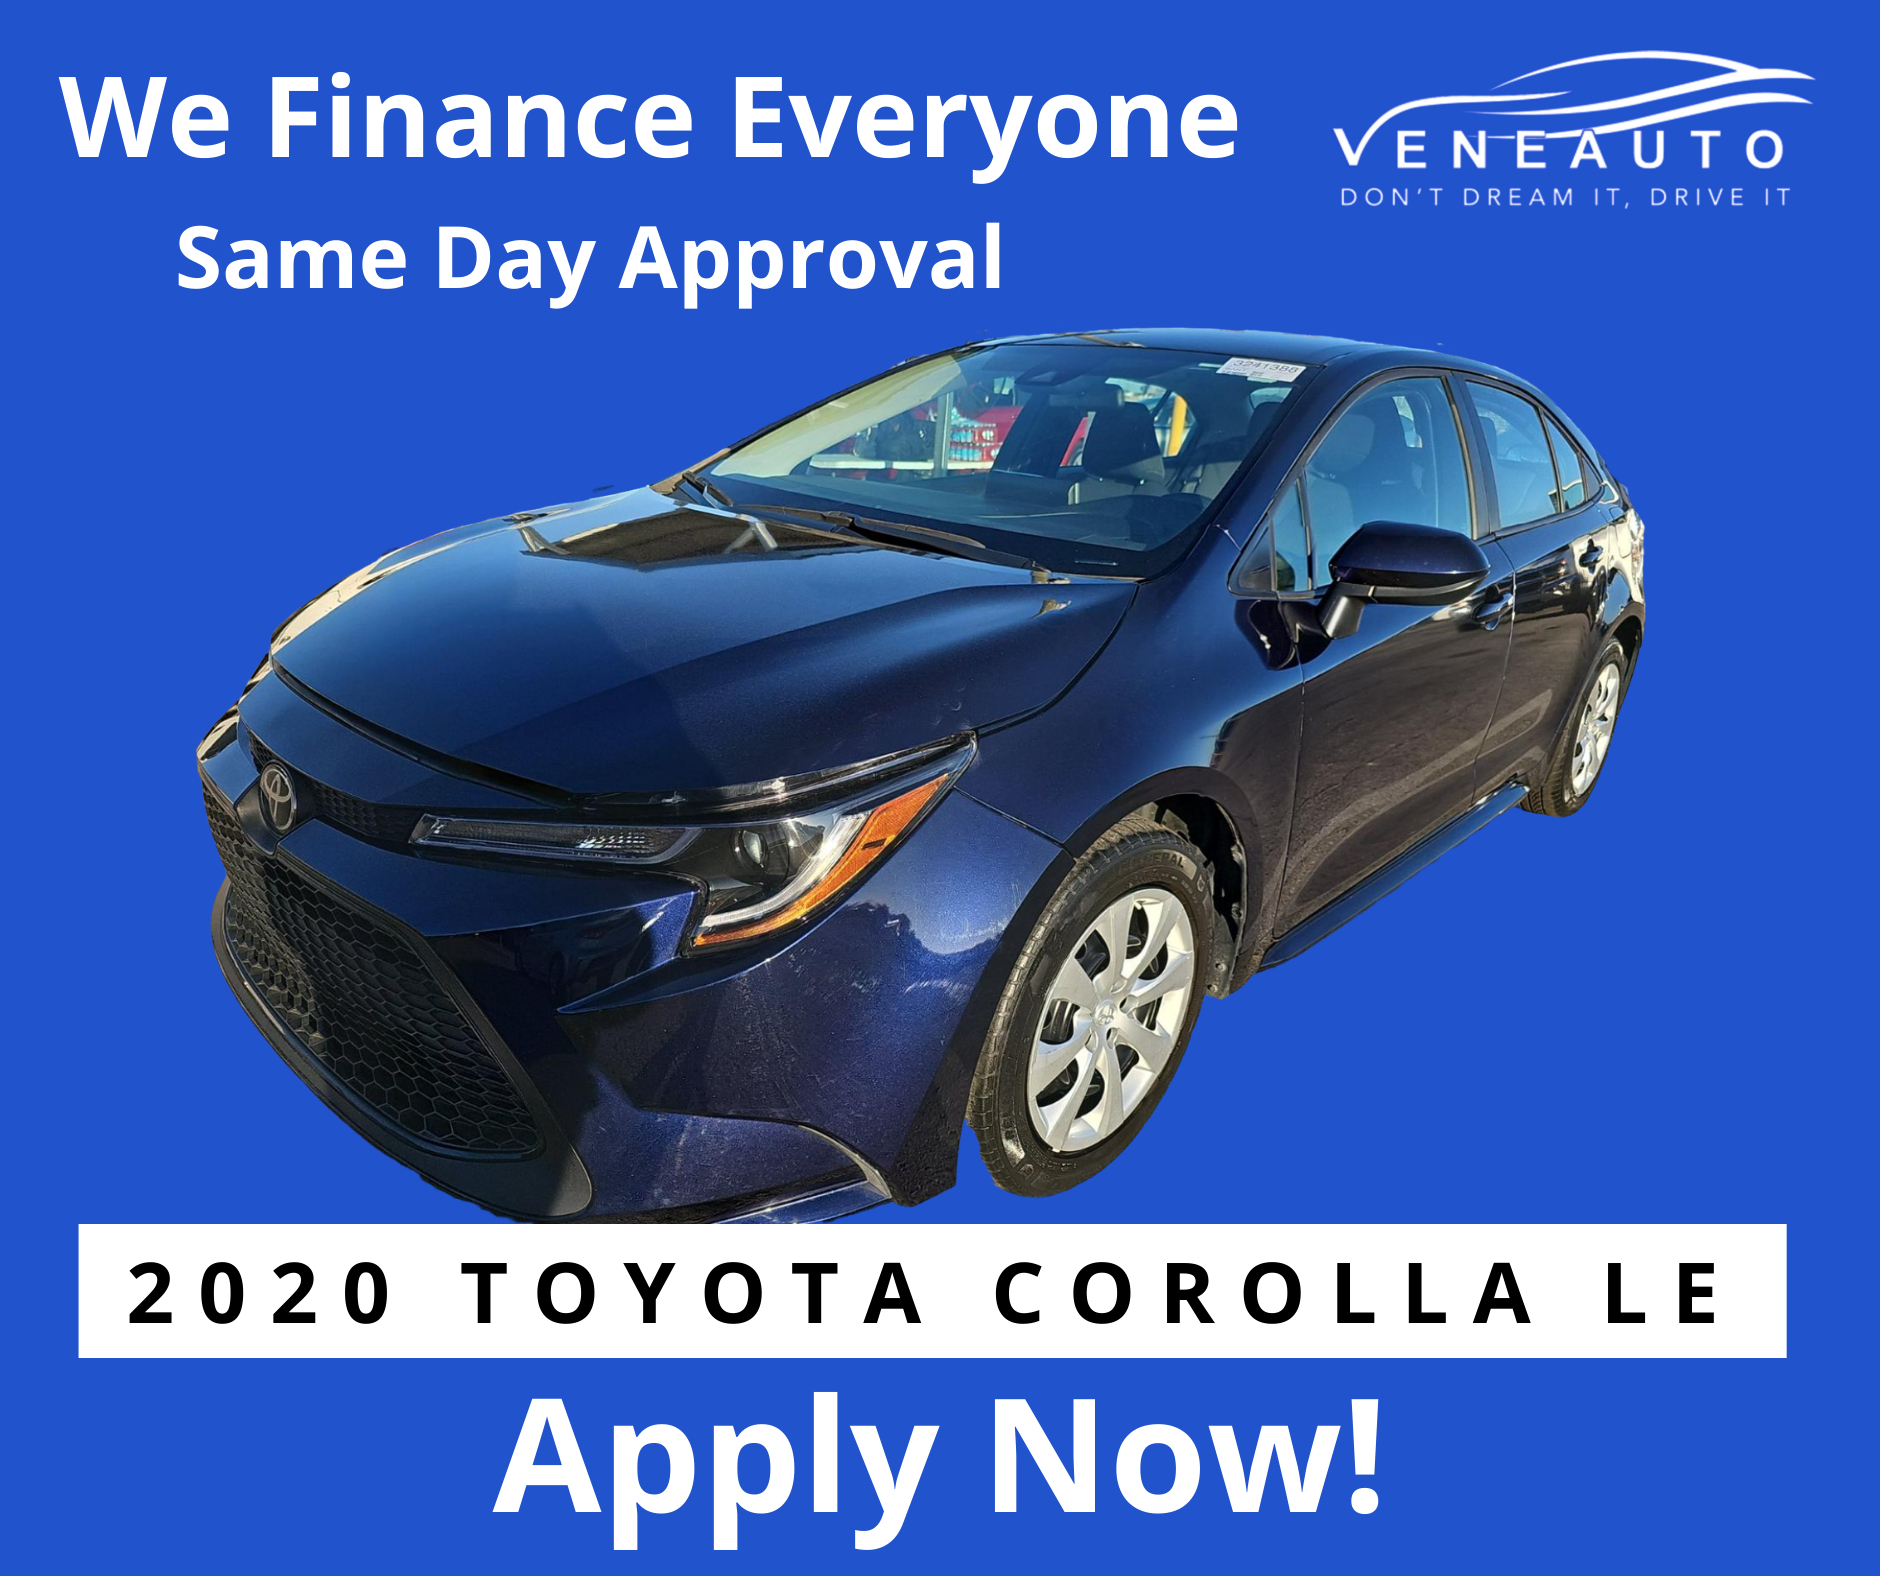 2020 Toyota Corolla for sale in Gainesville FL 32609 by Veneauto Cars